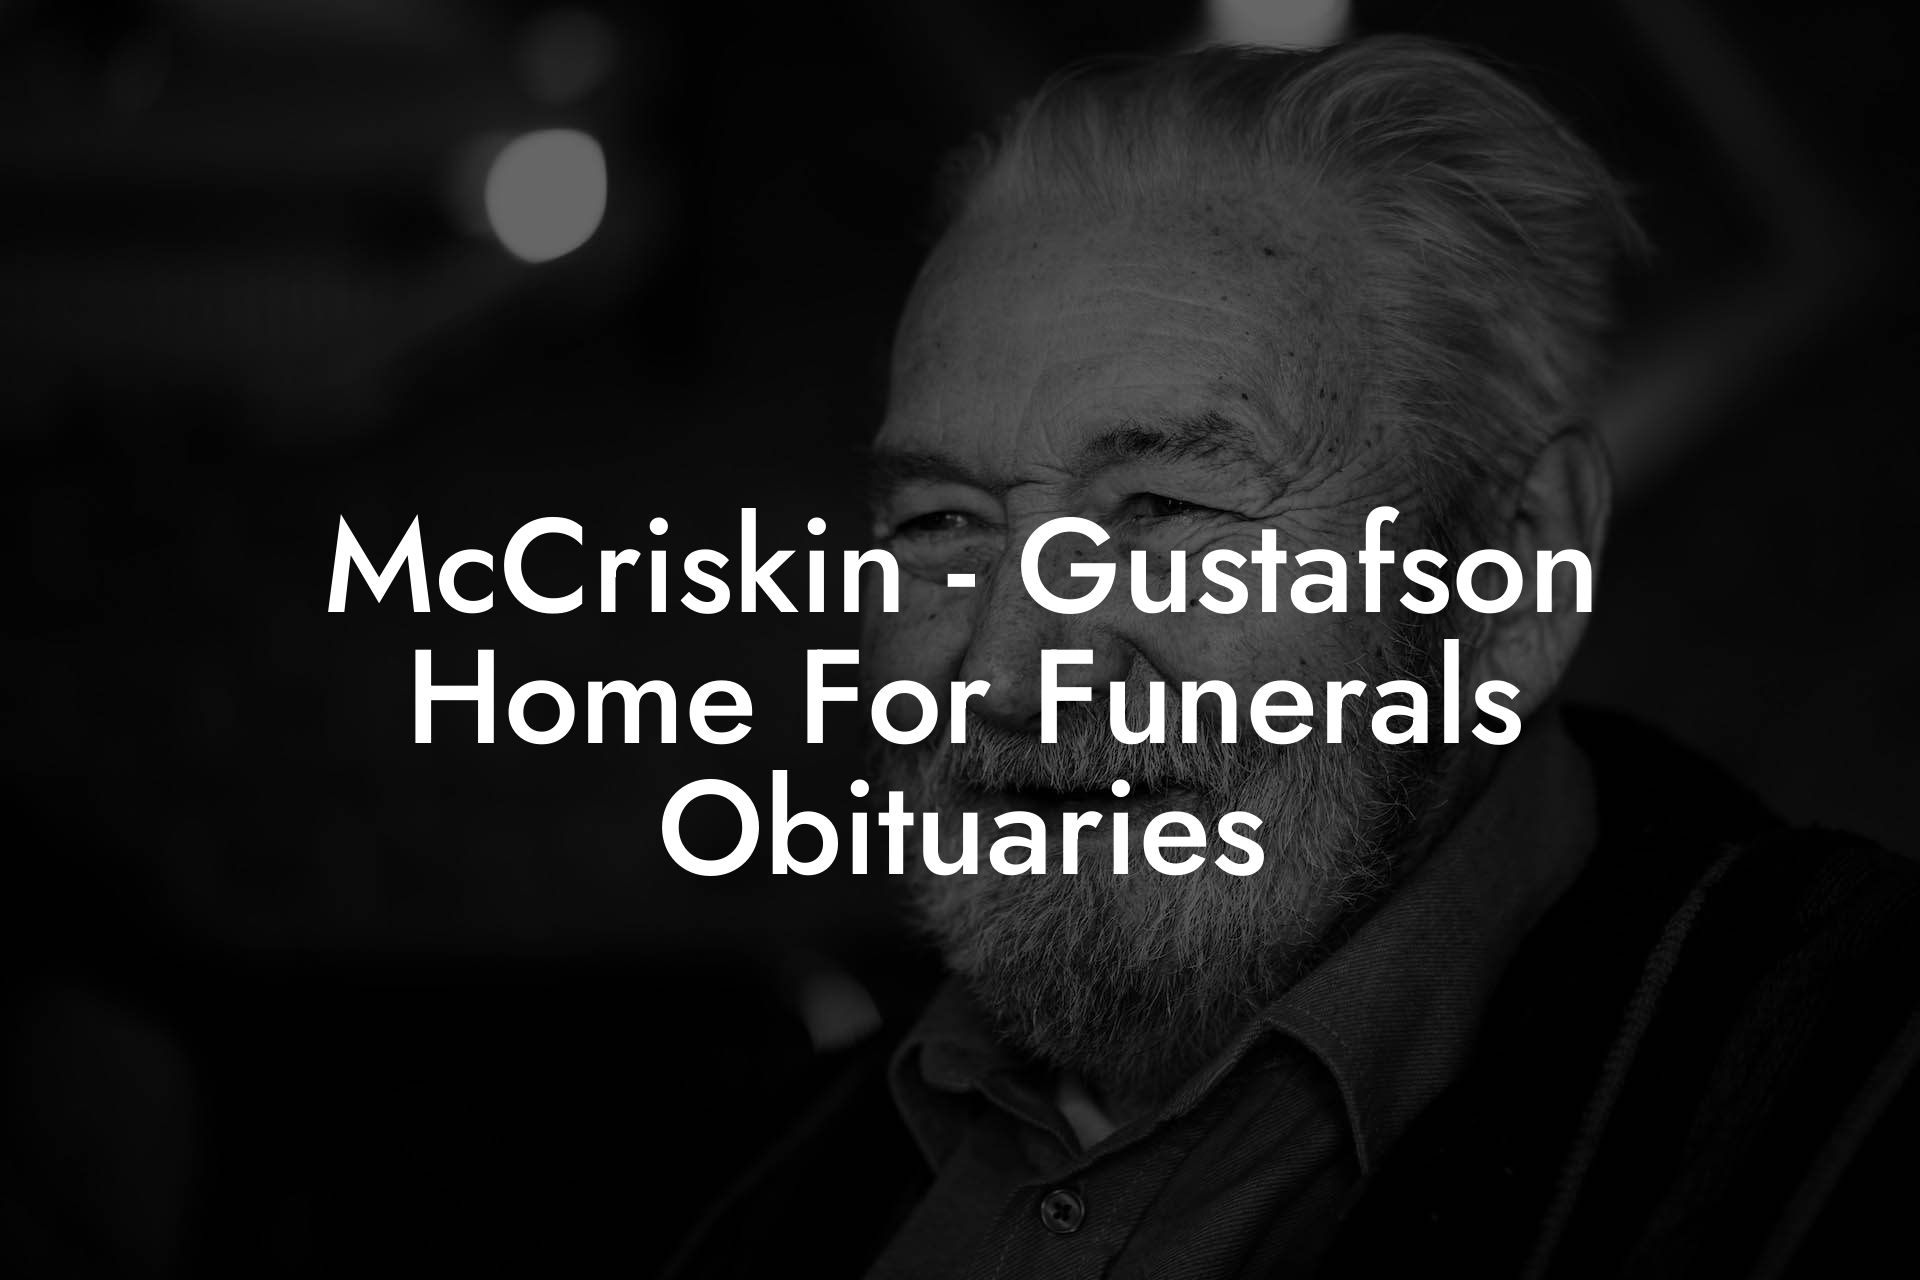 McCriskin - Gustafson Home For Funerals Obituaries